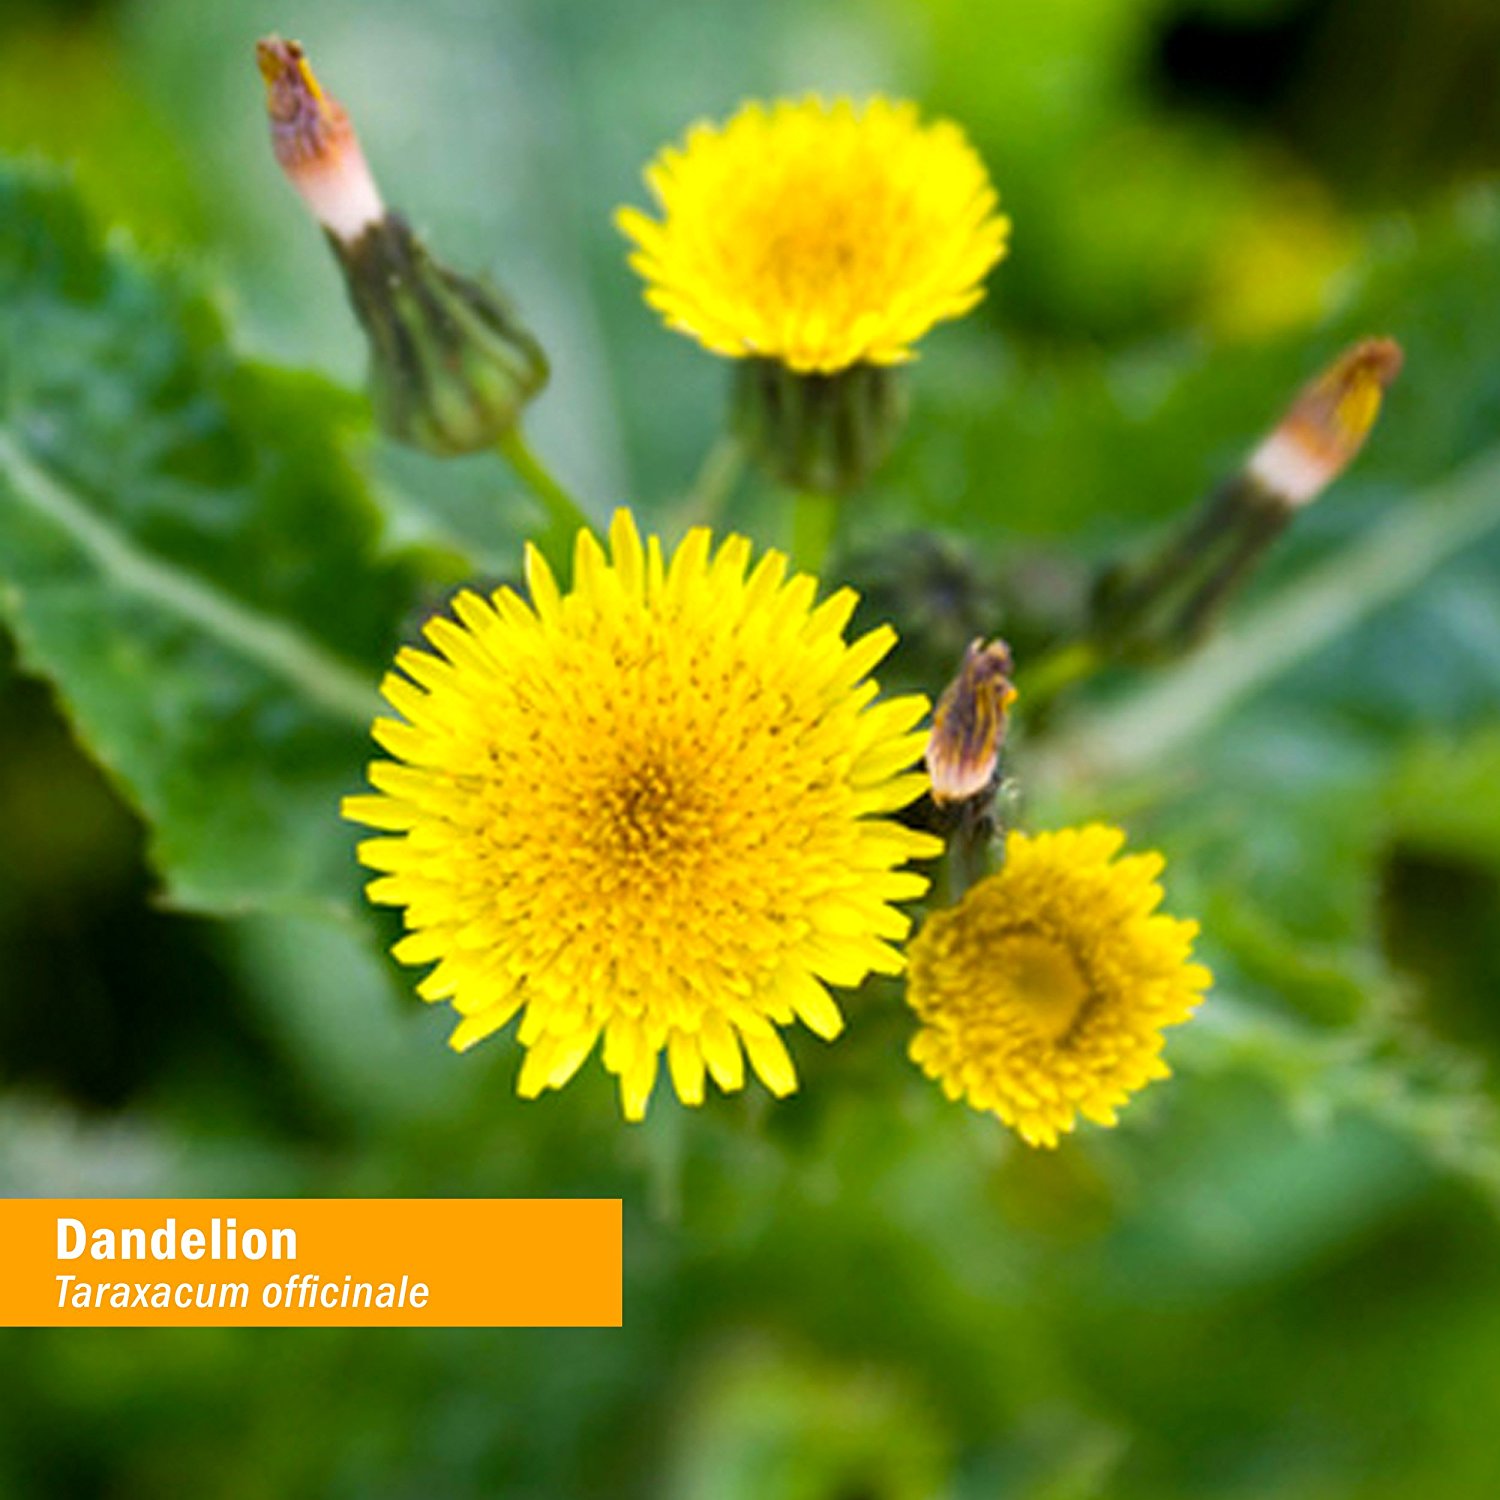 Amazon.com: Herb Pharm Certified Organic Dandelion Extract for ...